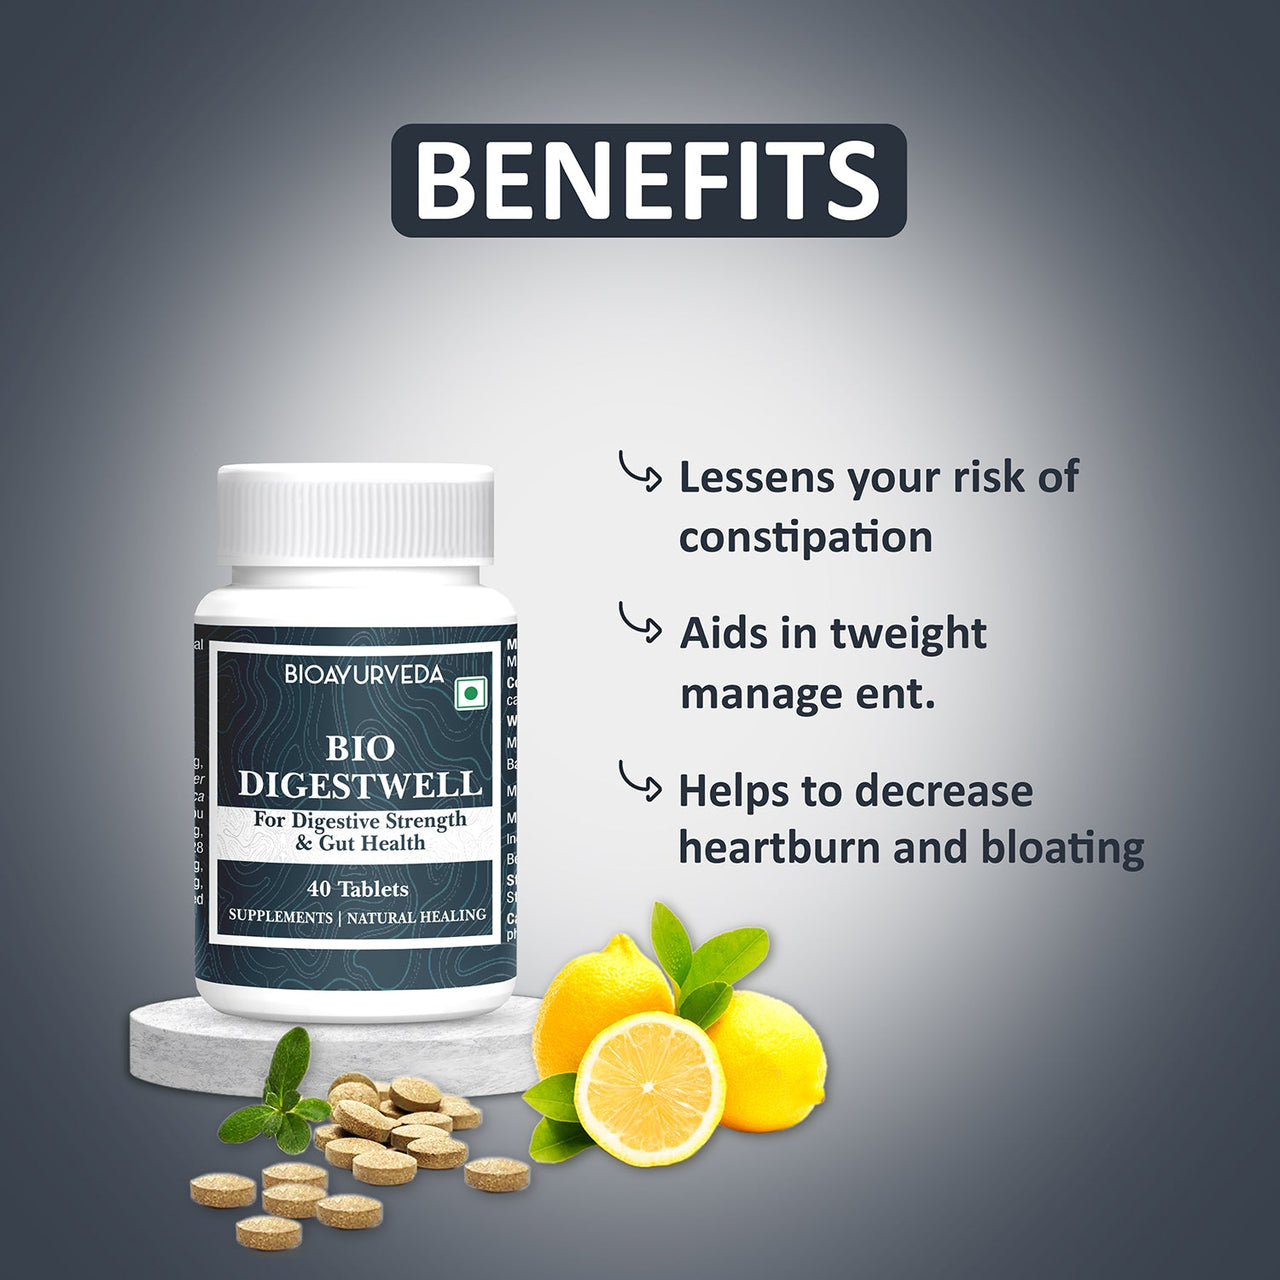 Bio Digestwell Tablet Benefits